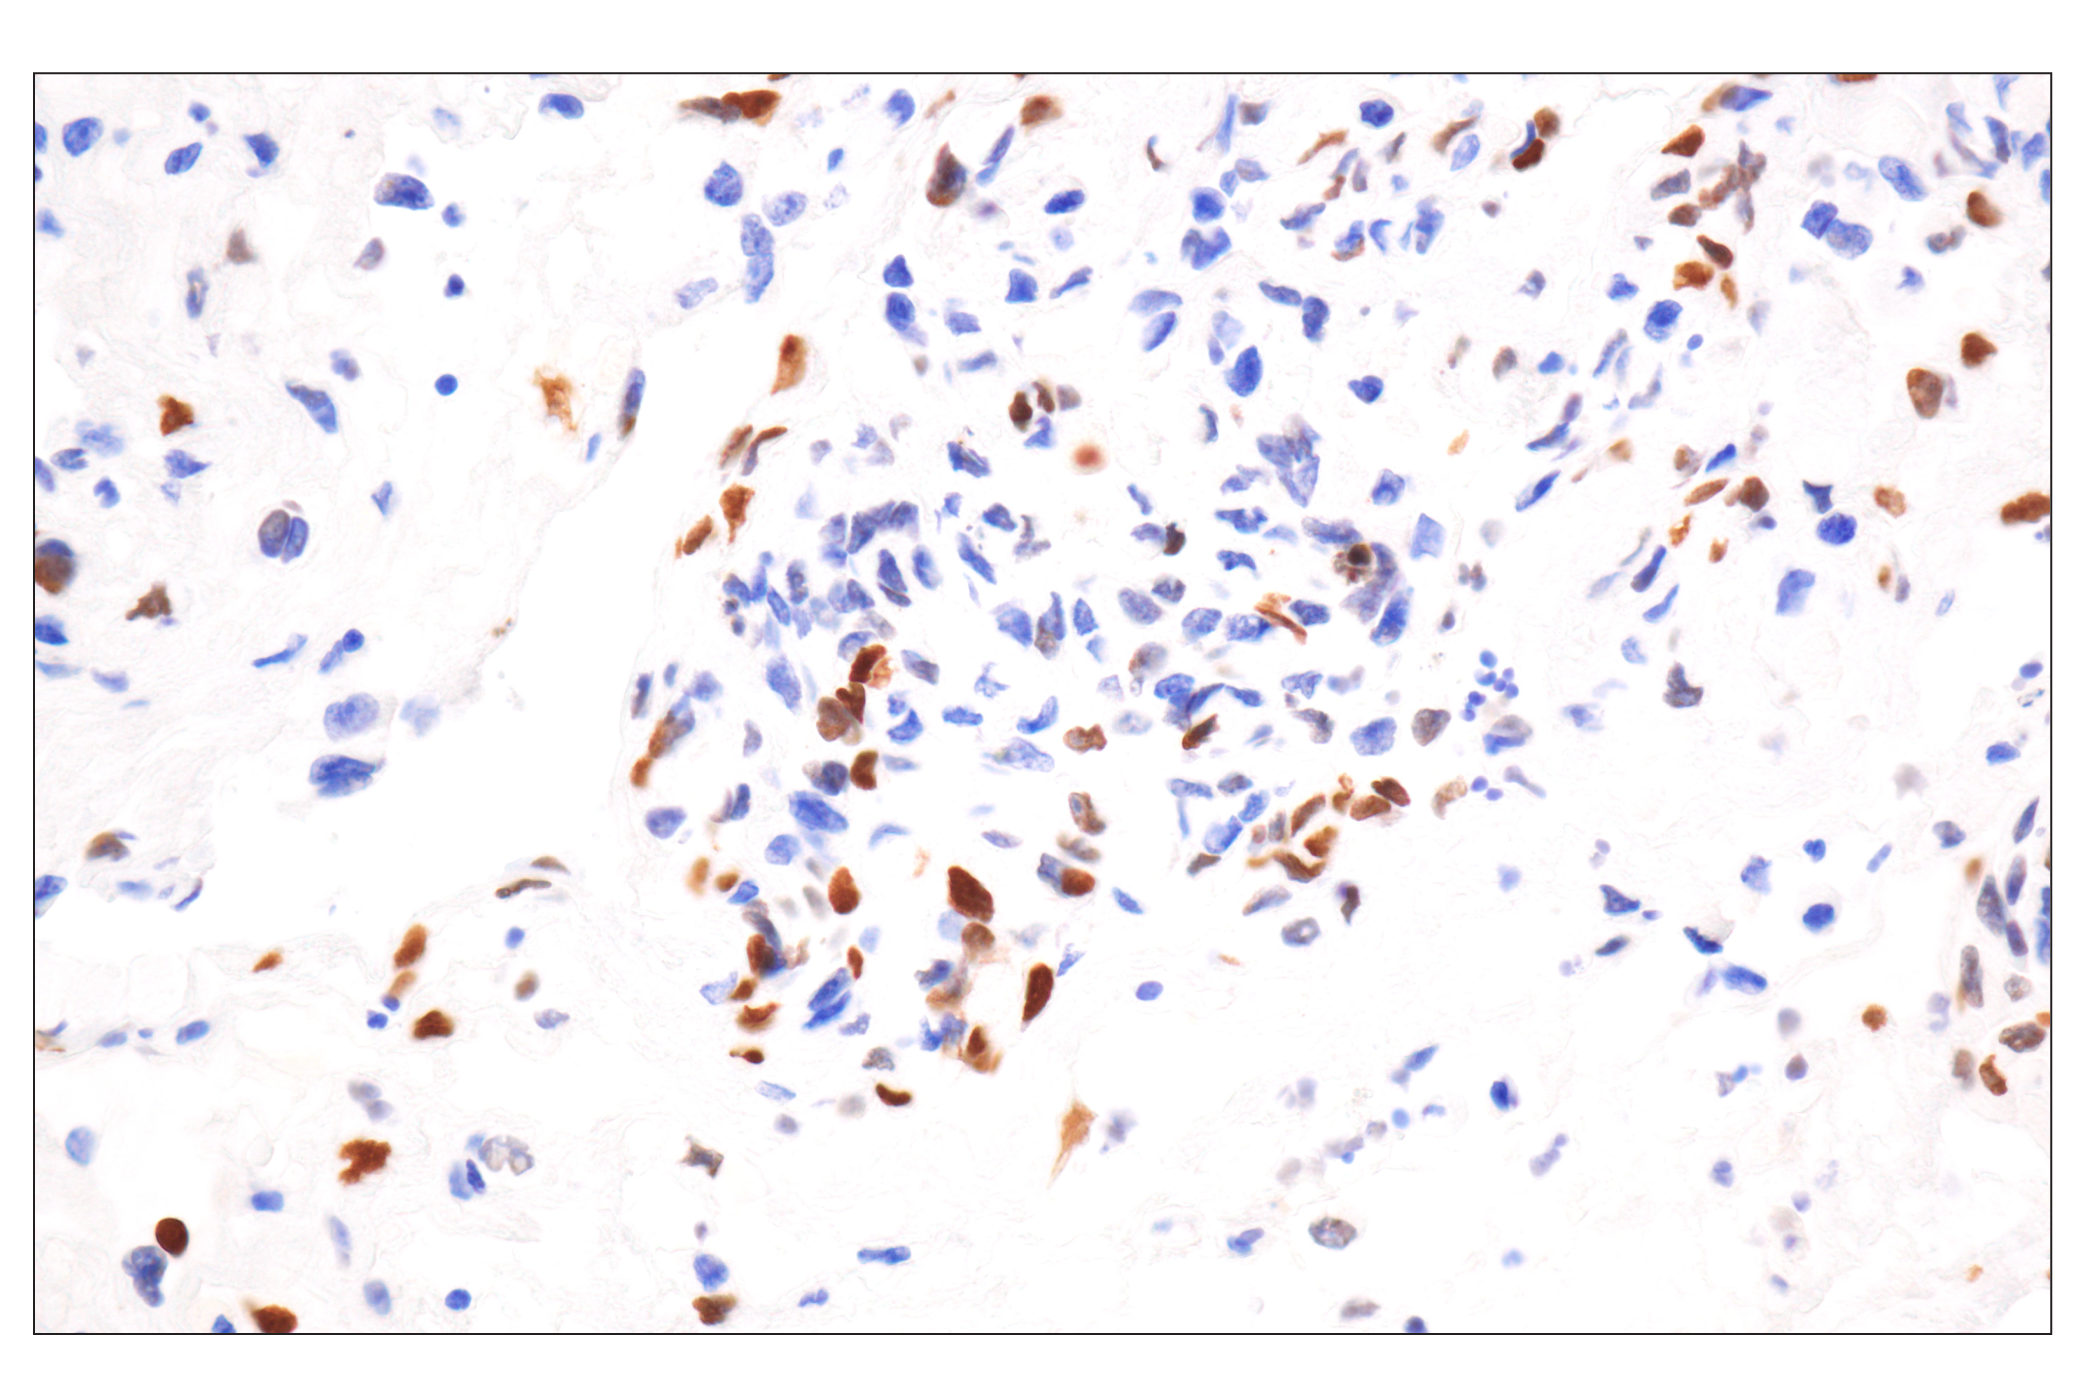  Image 4: PhosphoPlus® Histone H2A.X (Ser139) Antibody Duet